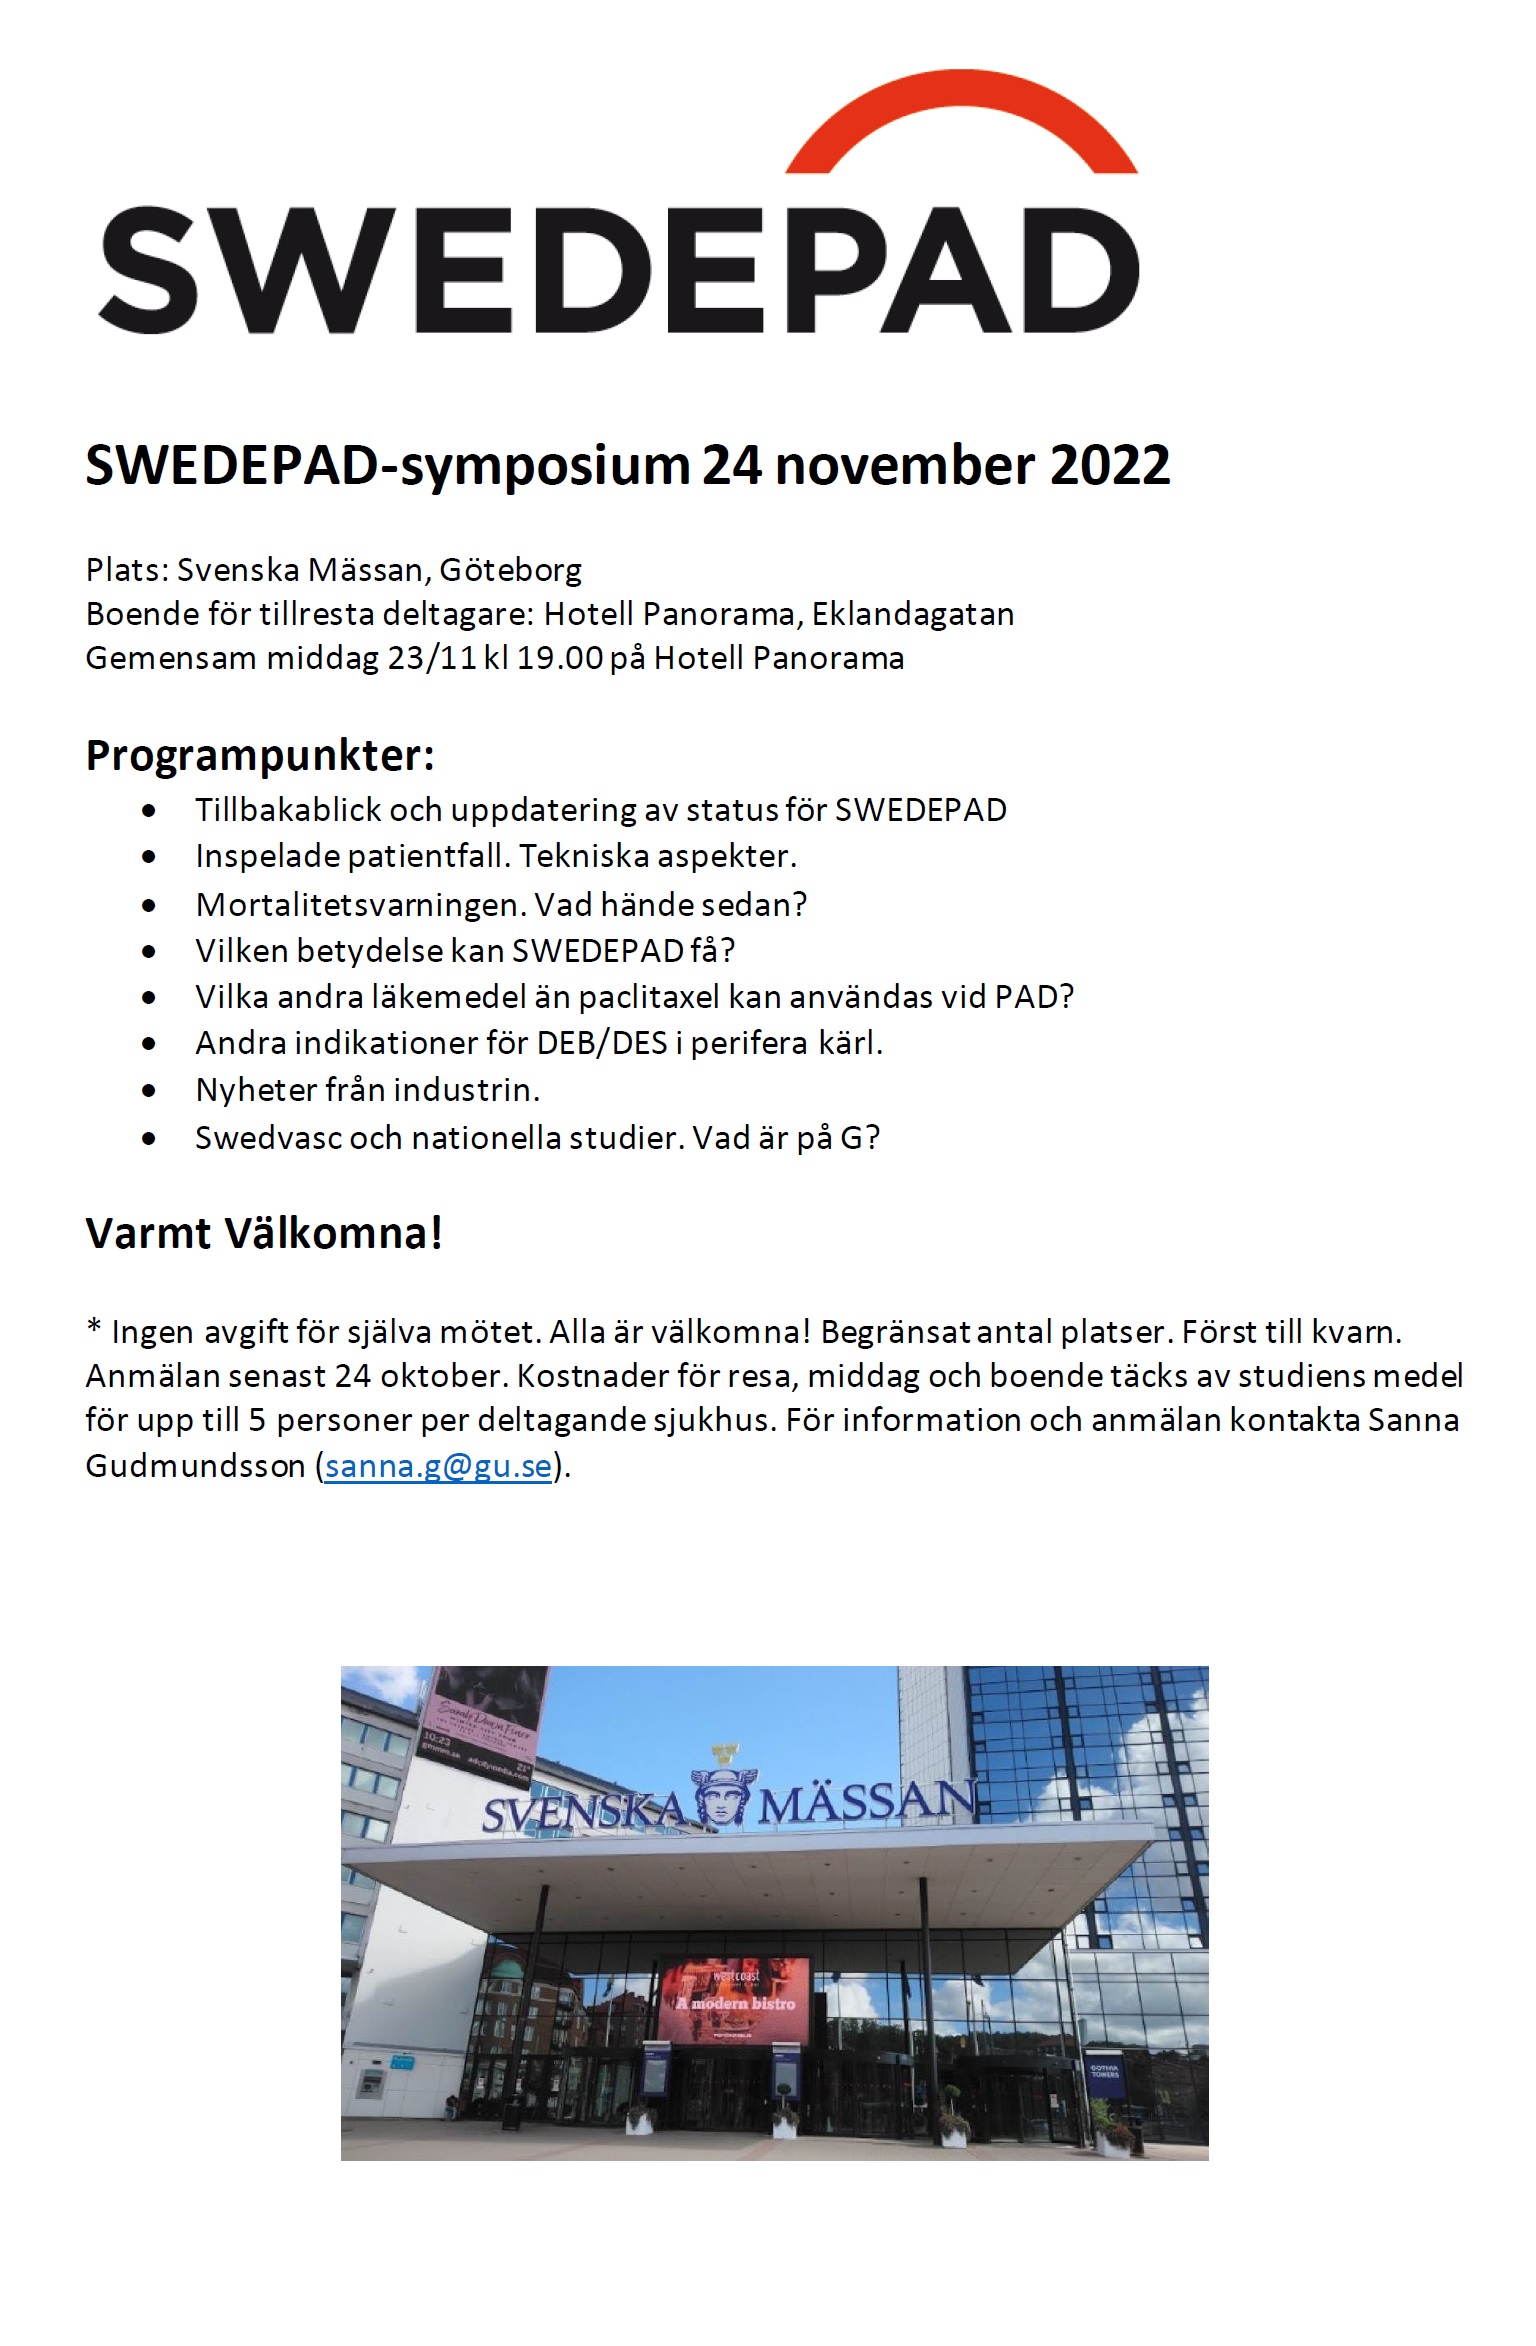 swedepad symposium